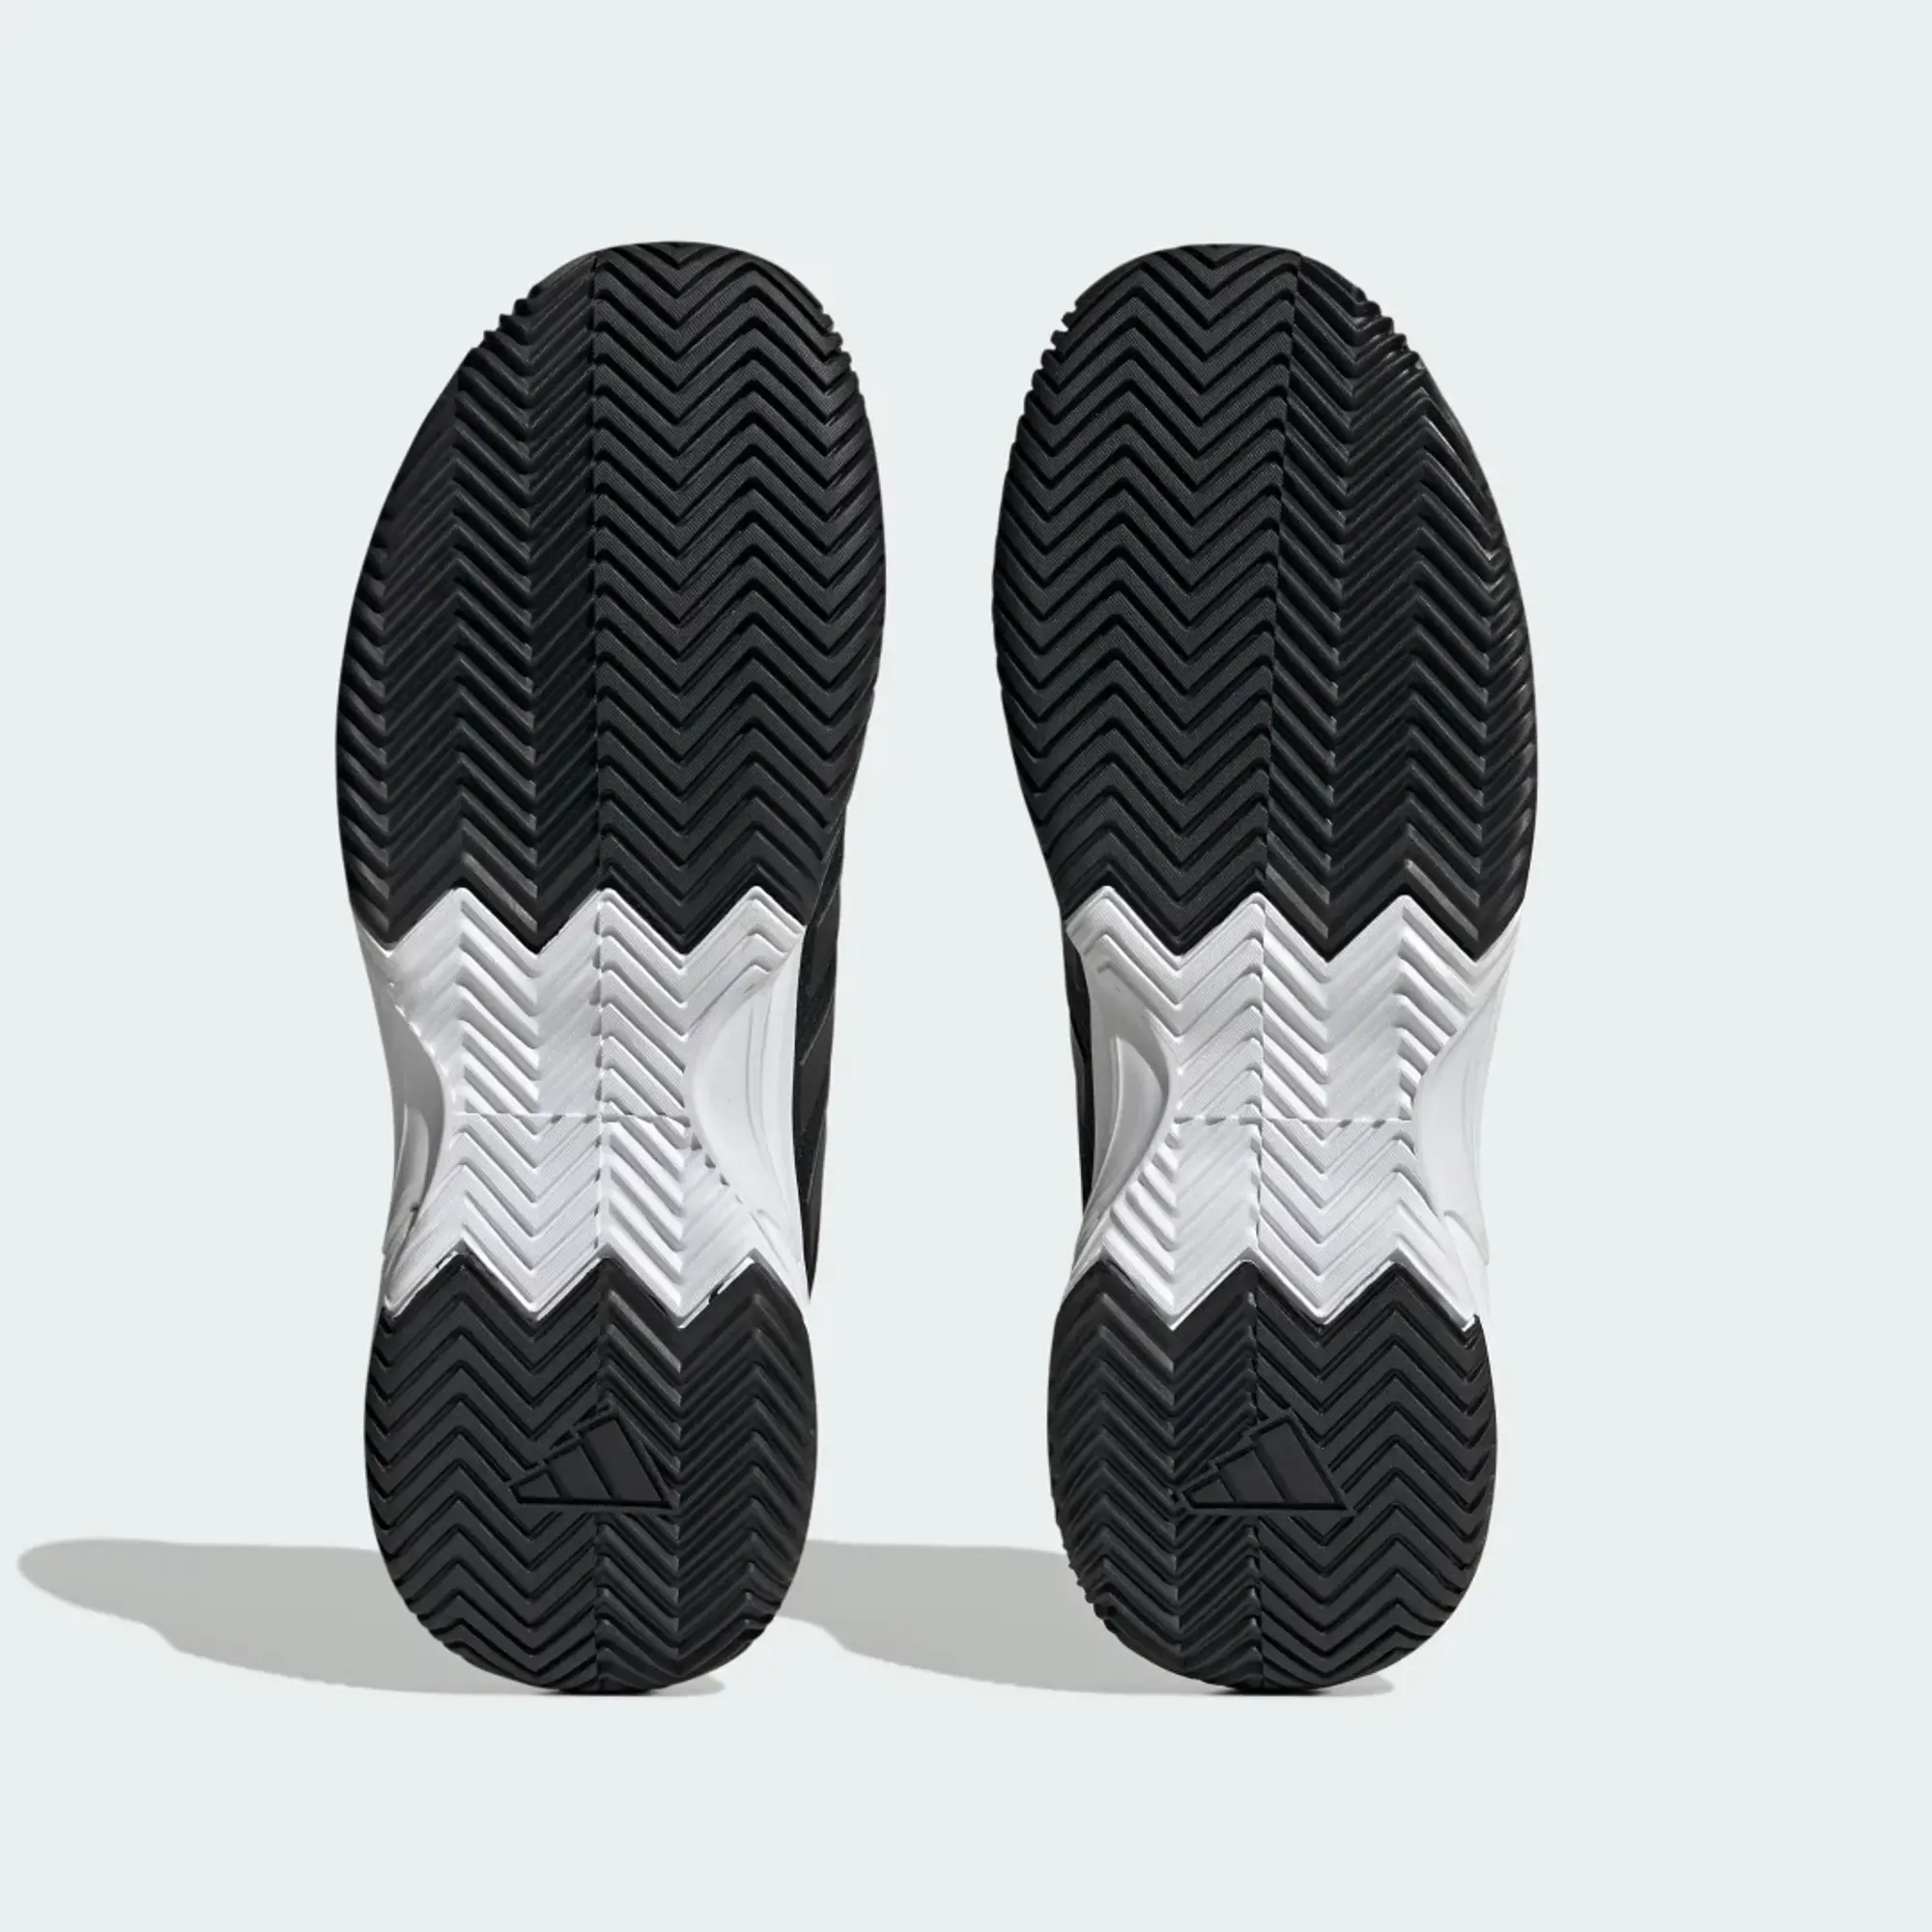 adidas Gamecourt 2.0 Tennis Shoes - Core Black / Core Black / Grey Four